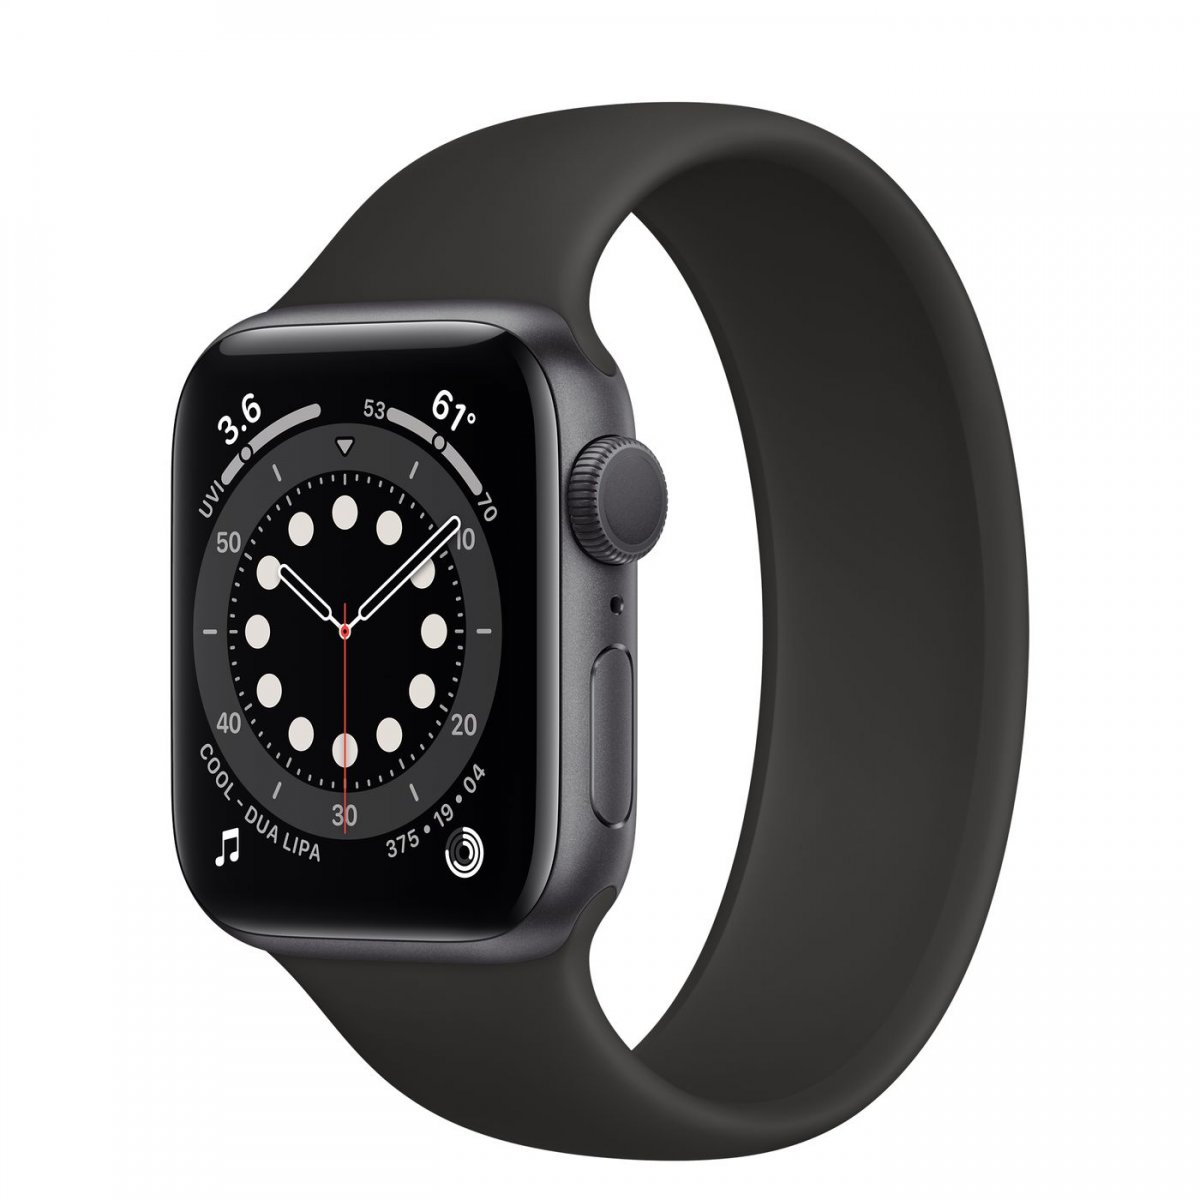 Řemínek iMore Solo Loop Apple Watch Series 1/2/3 42mm - Černá (L)